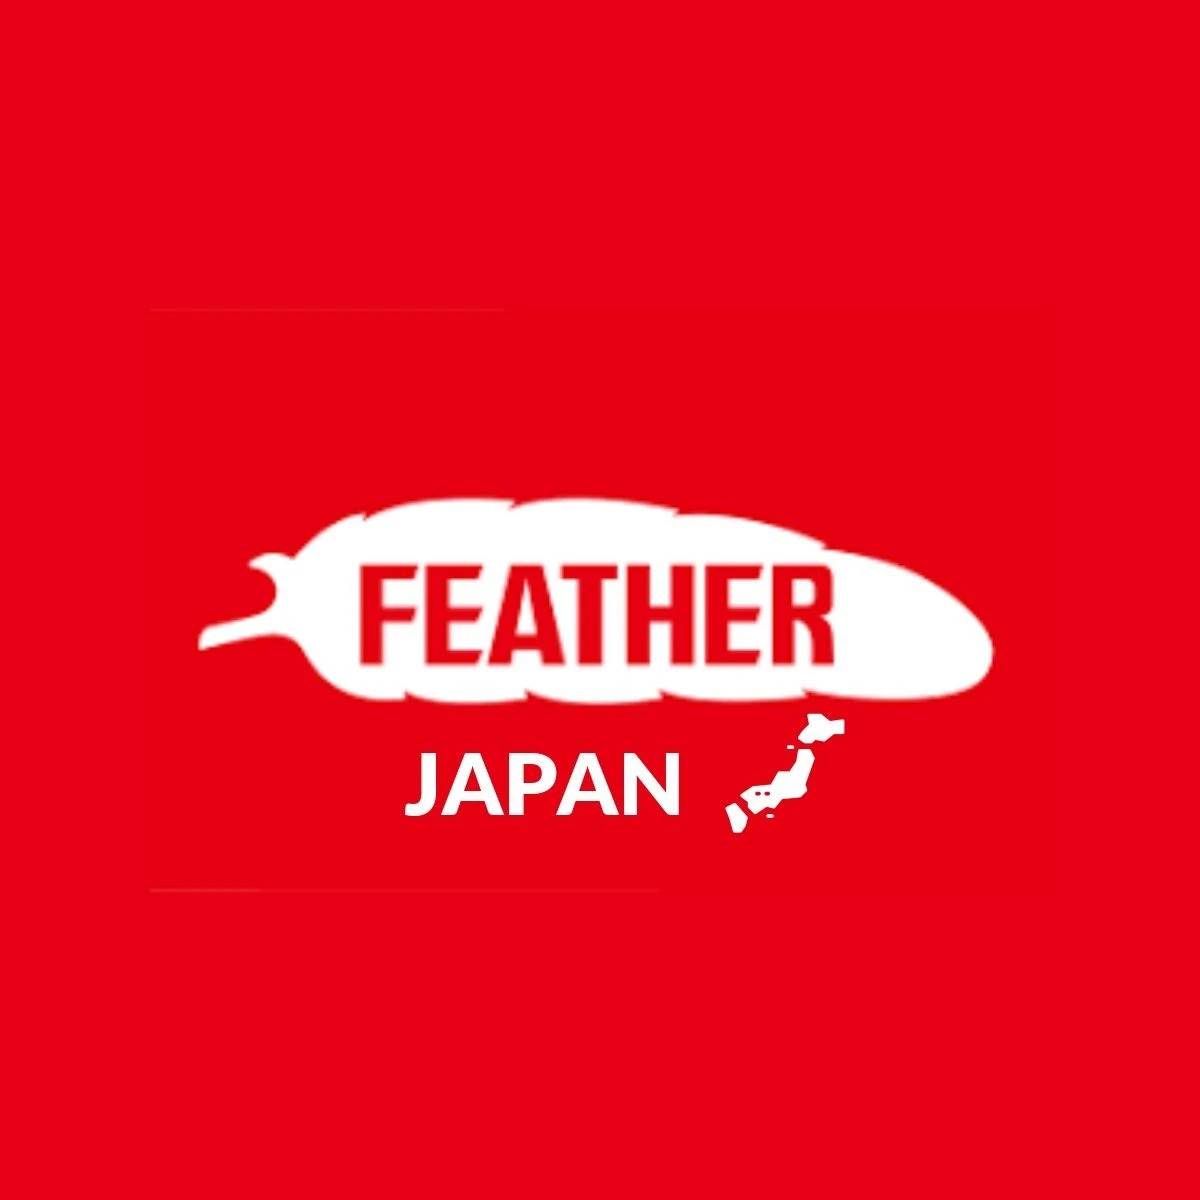 Feather Japan Styling Razors - Canadian Feather Razor Blades logo